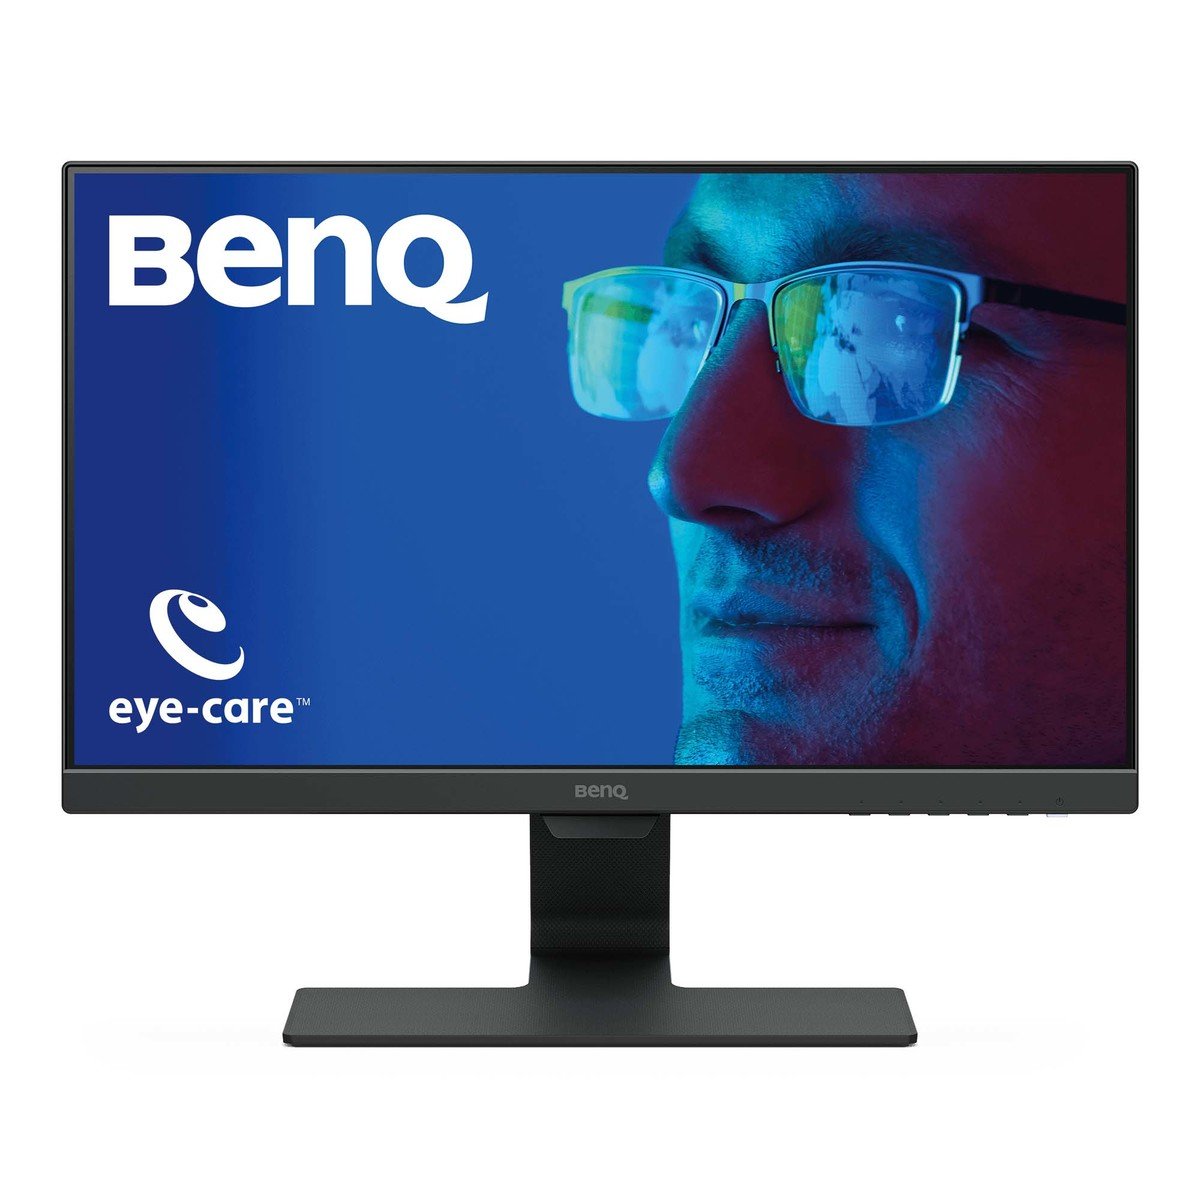 Benq Monitor 21.5" full HD, IPS Display with HDMI, Display port & inbuilt speaker